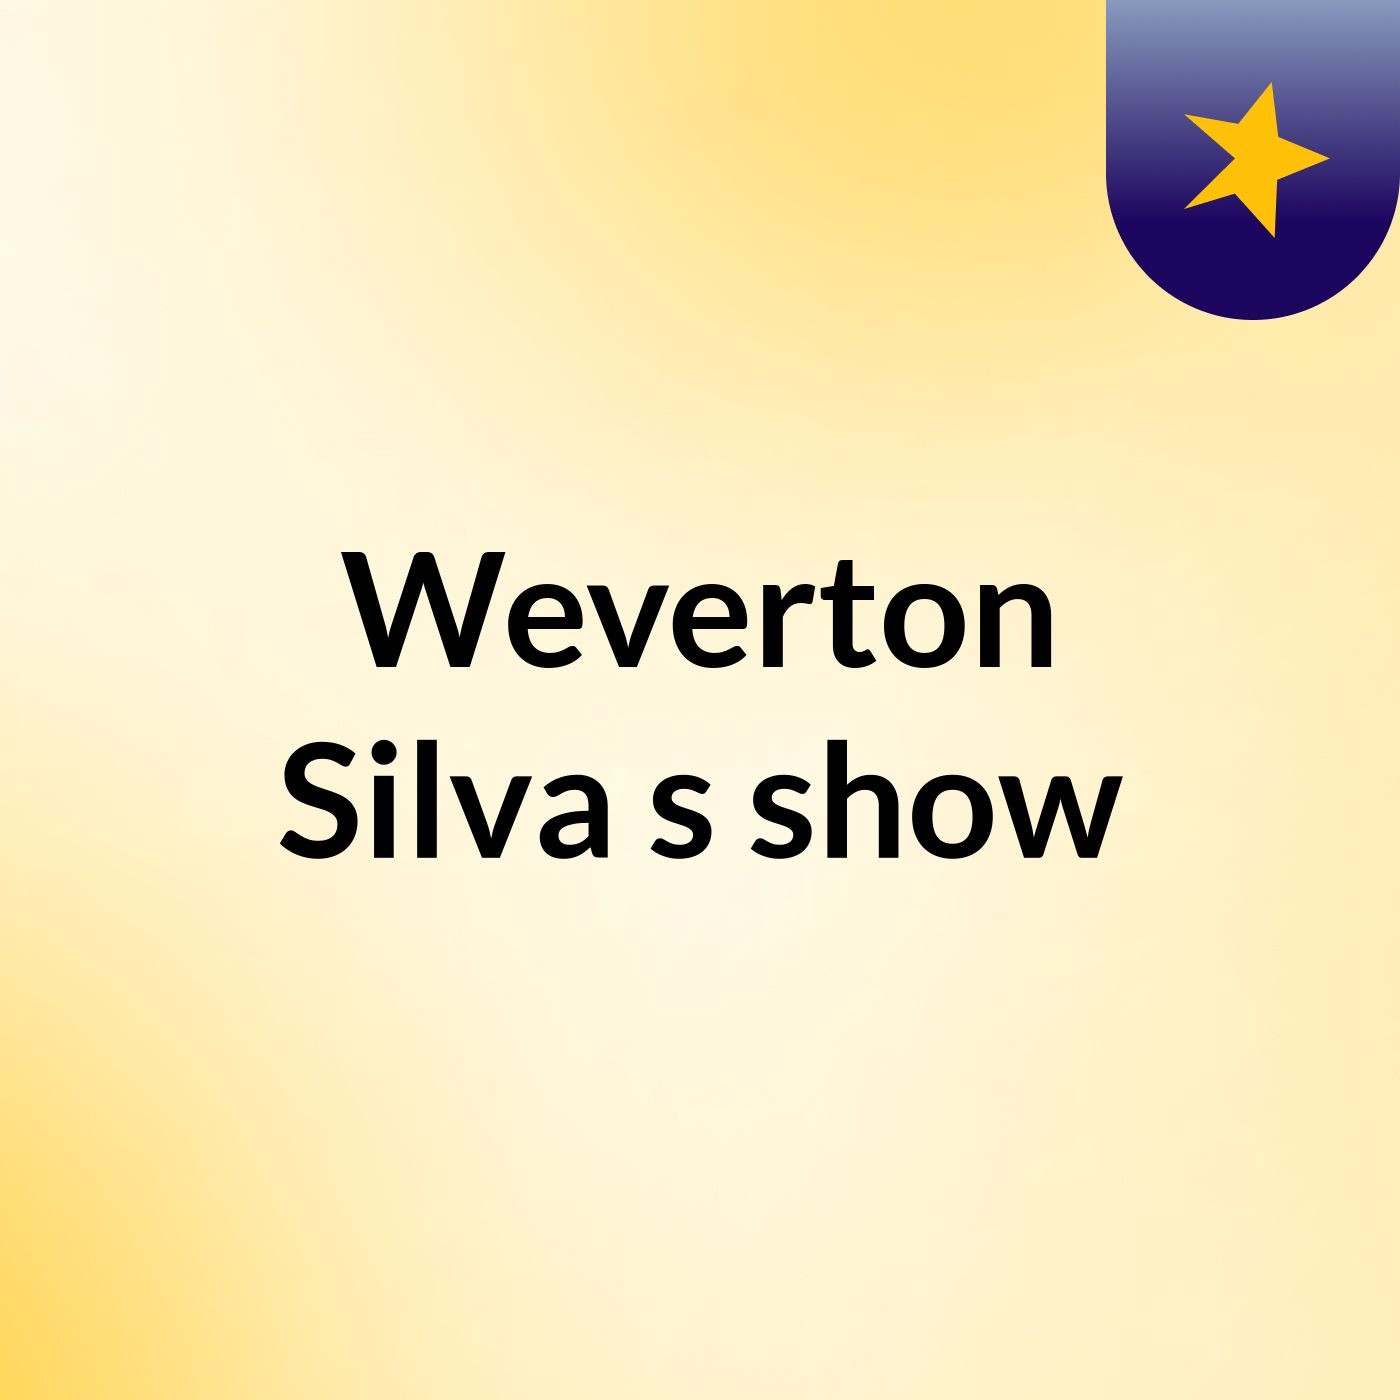 Weverton Silva's show